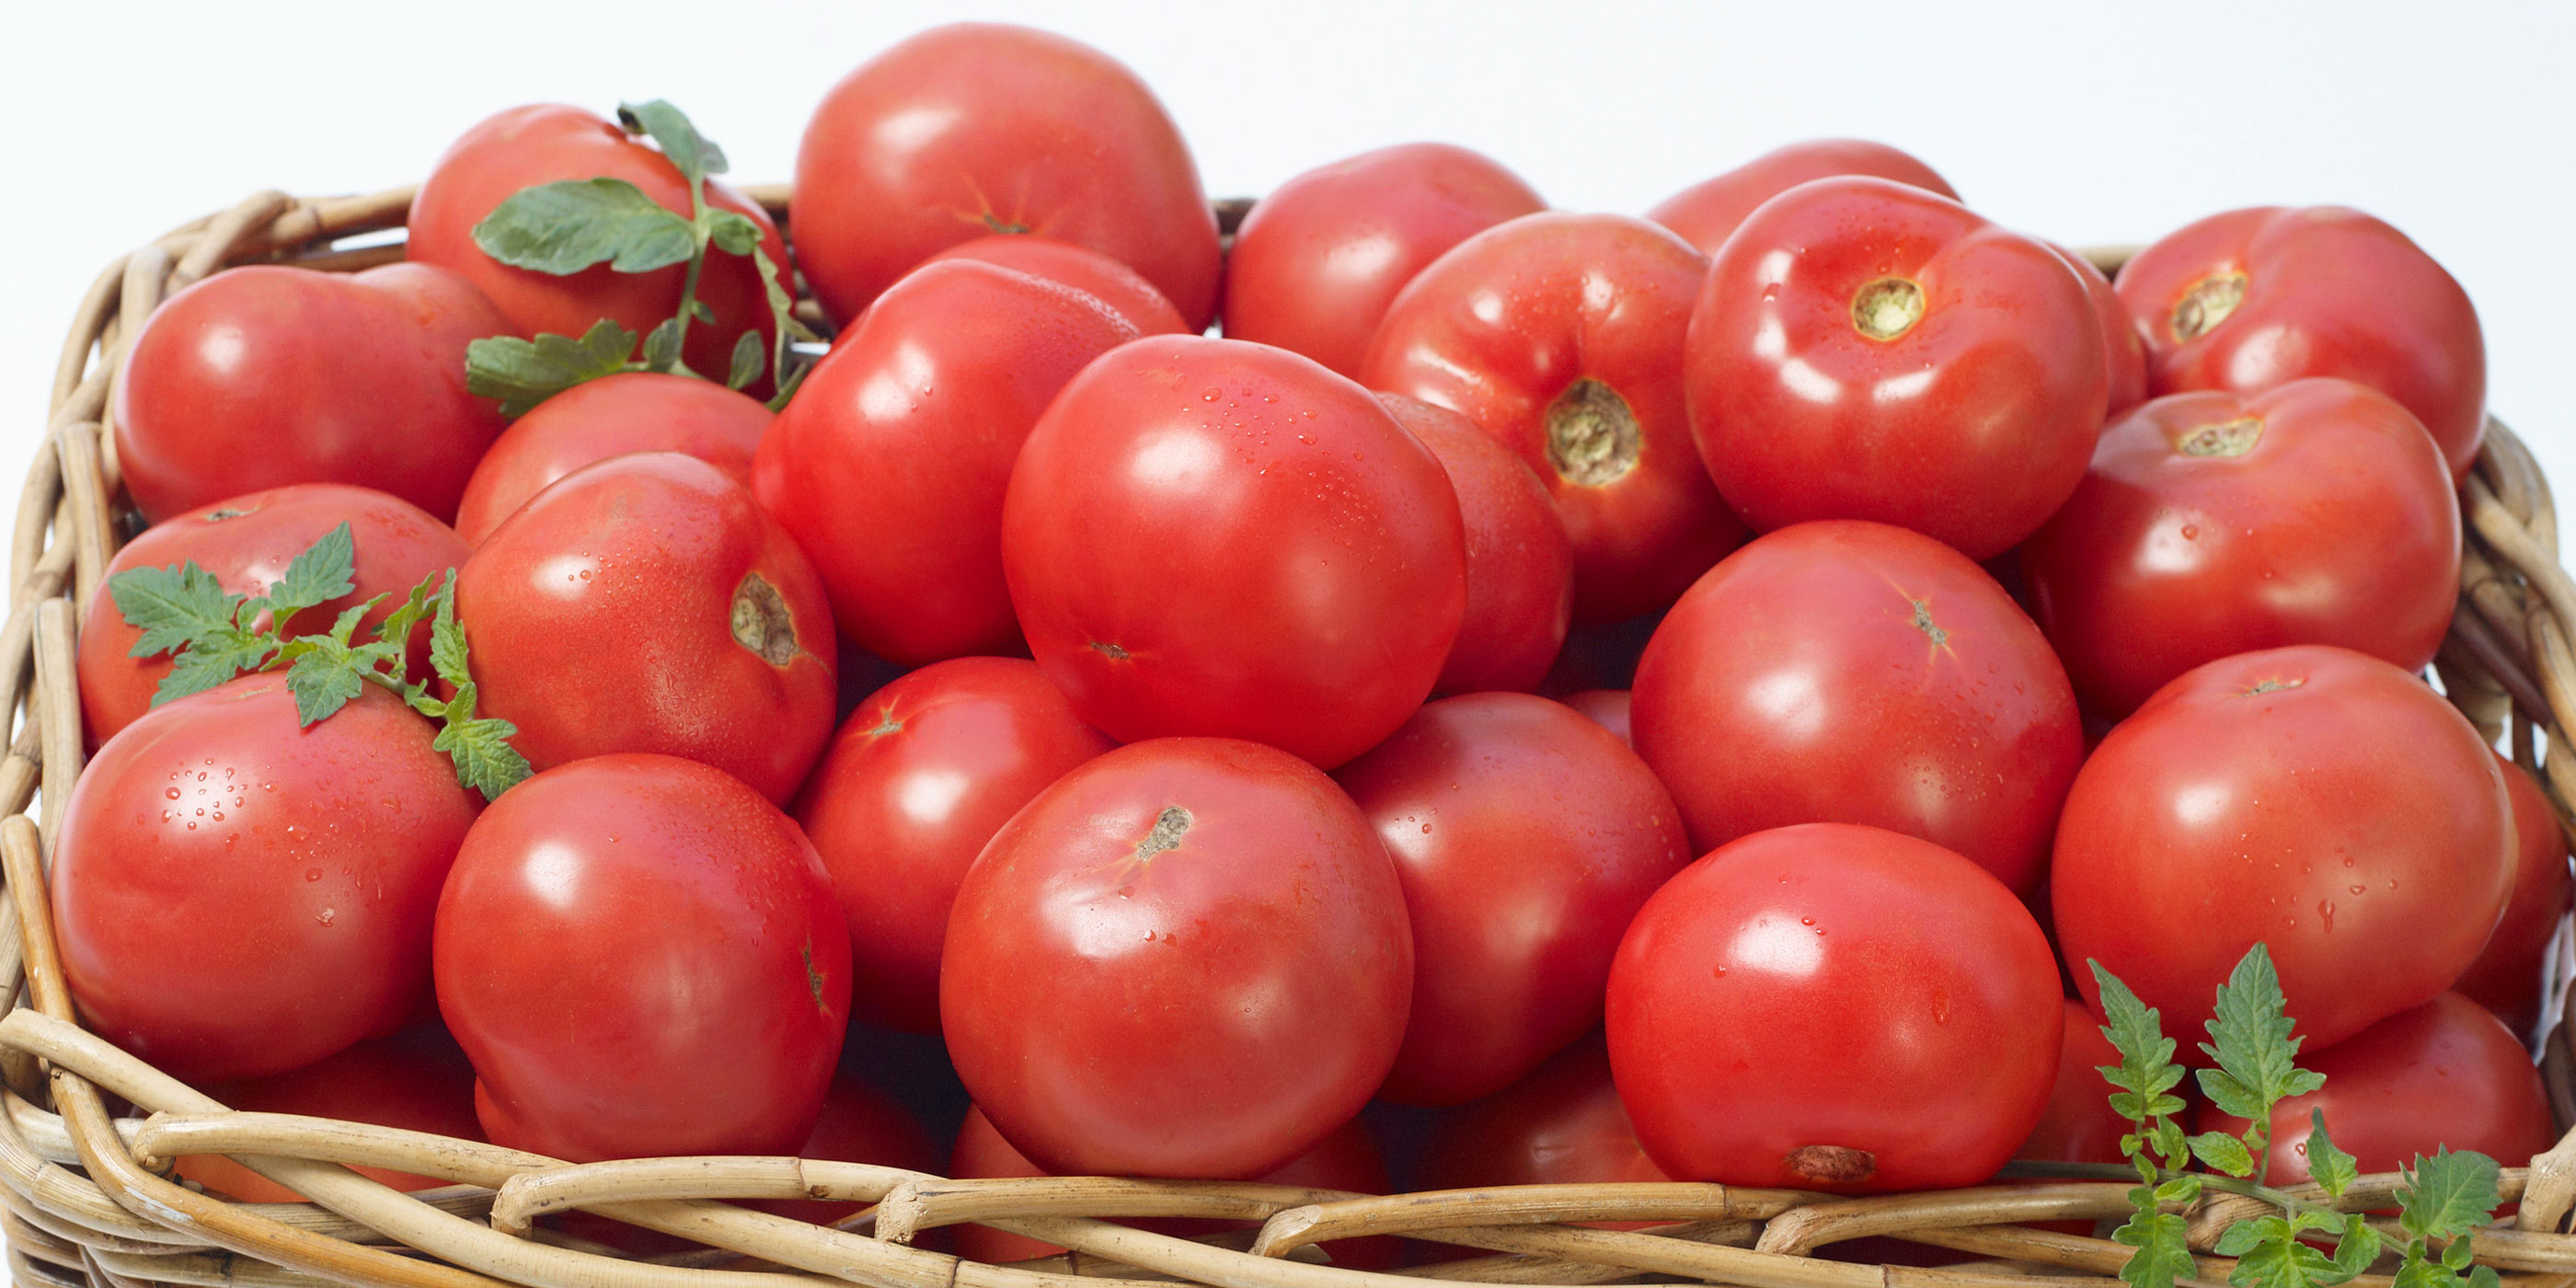 Florida Tomato Committee